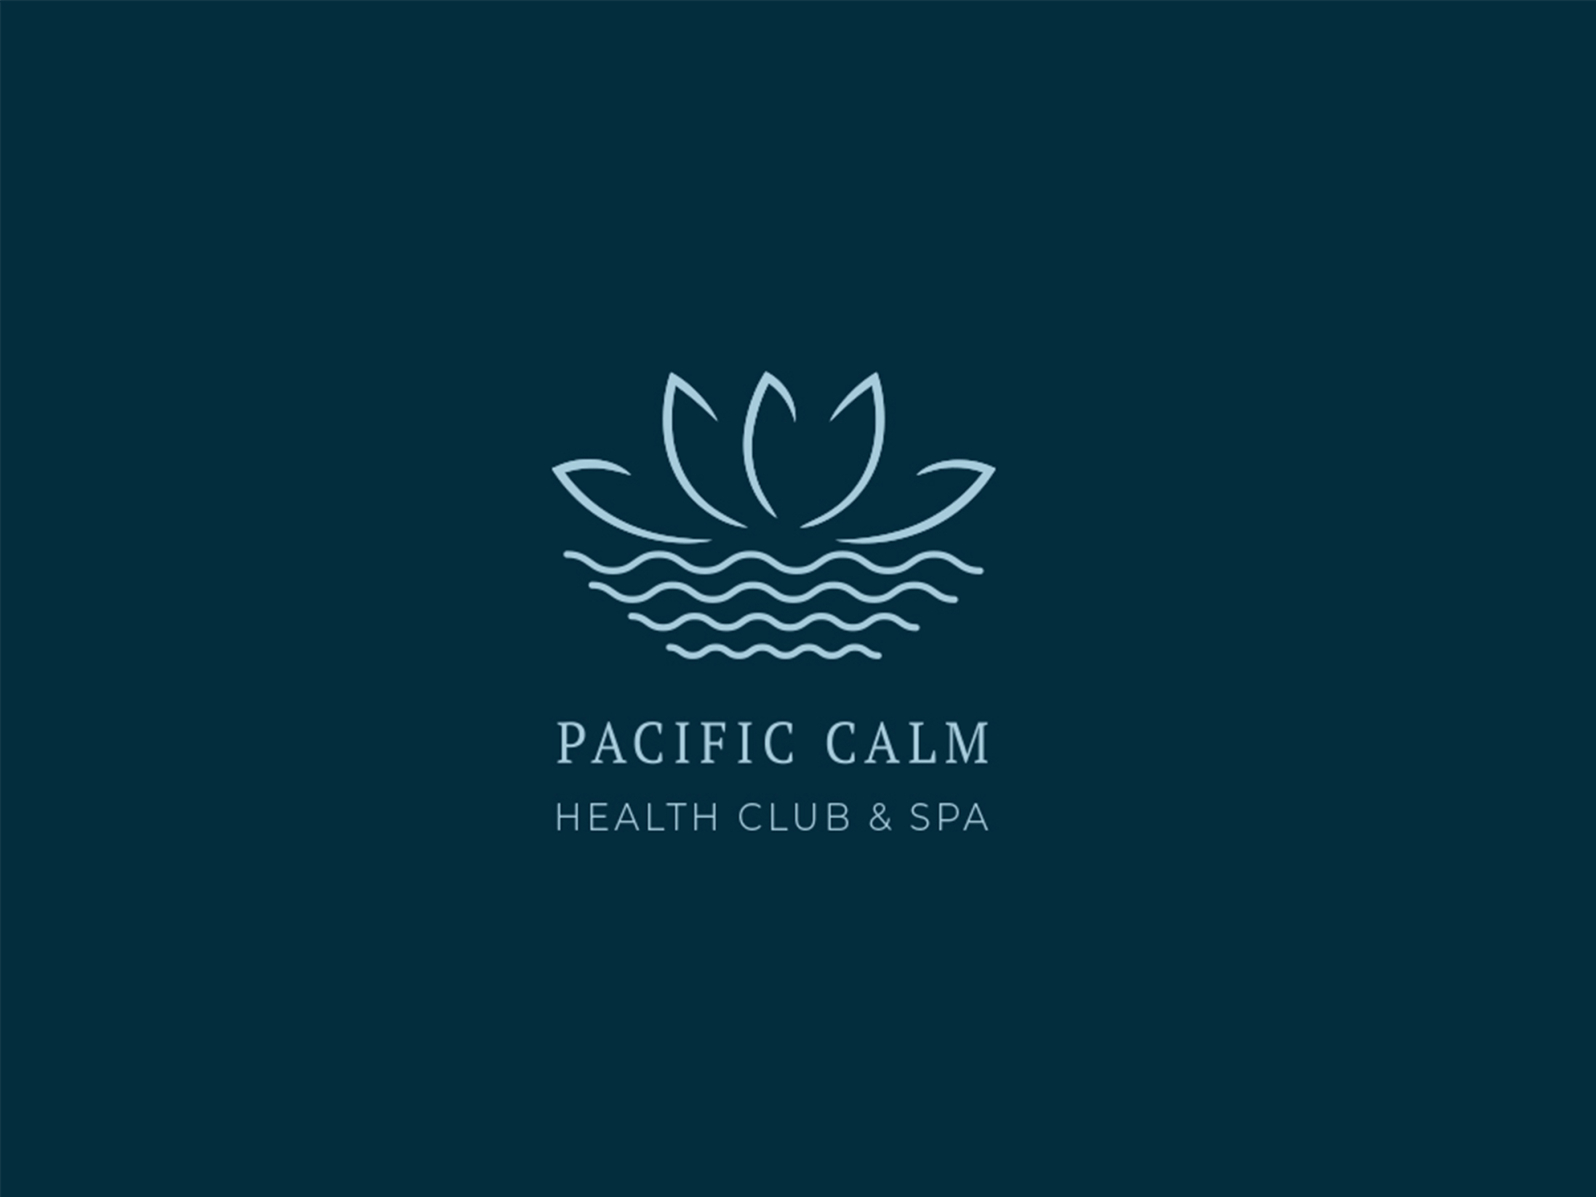 Pacific Calm logo by Elhassen Youkana on Dribbble